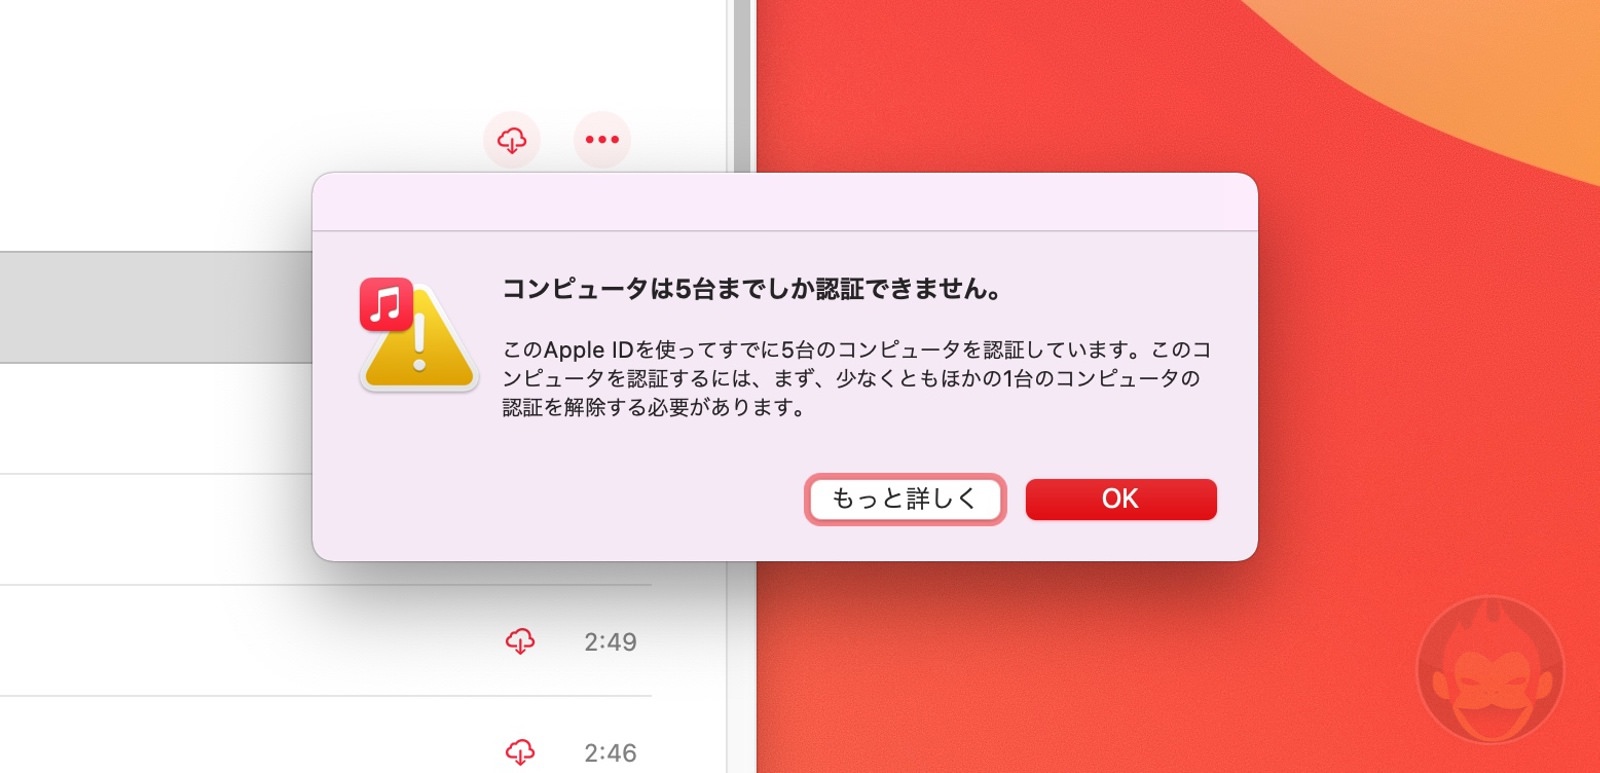 Mac Apple ID Music Account Verification Error 03